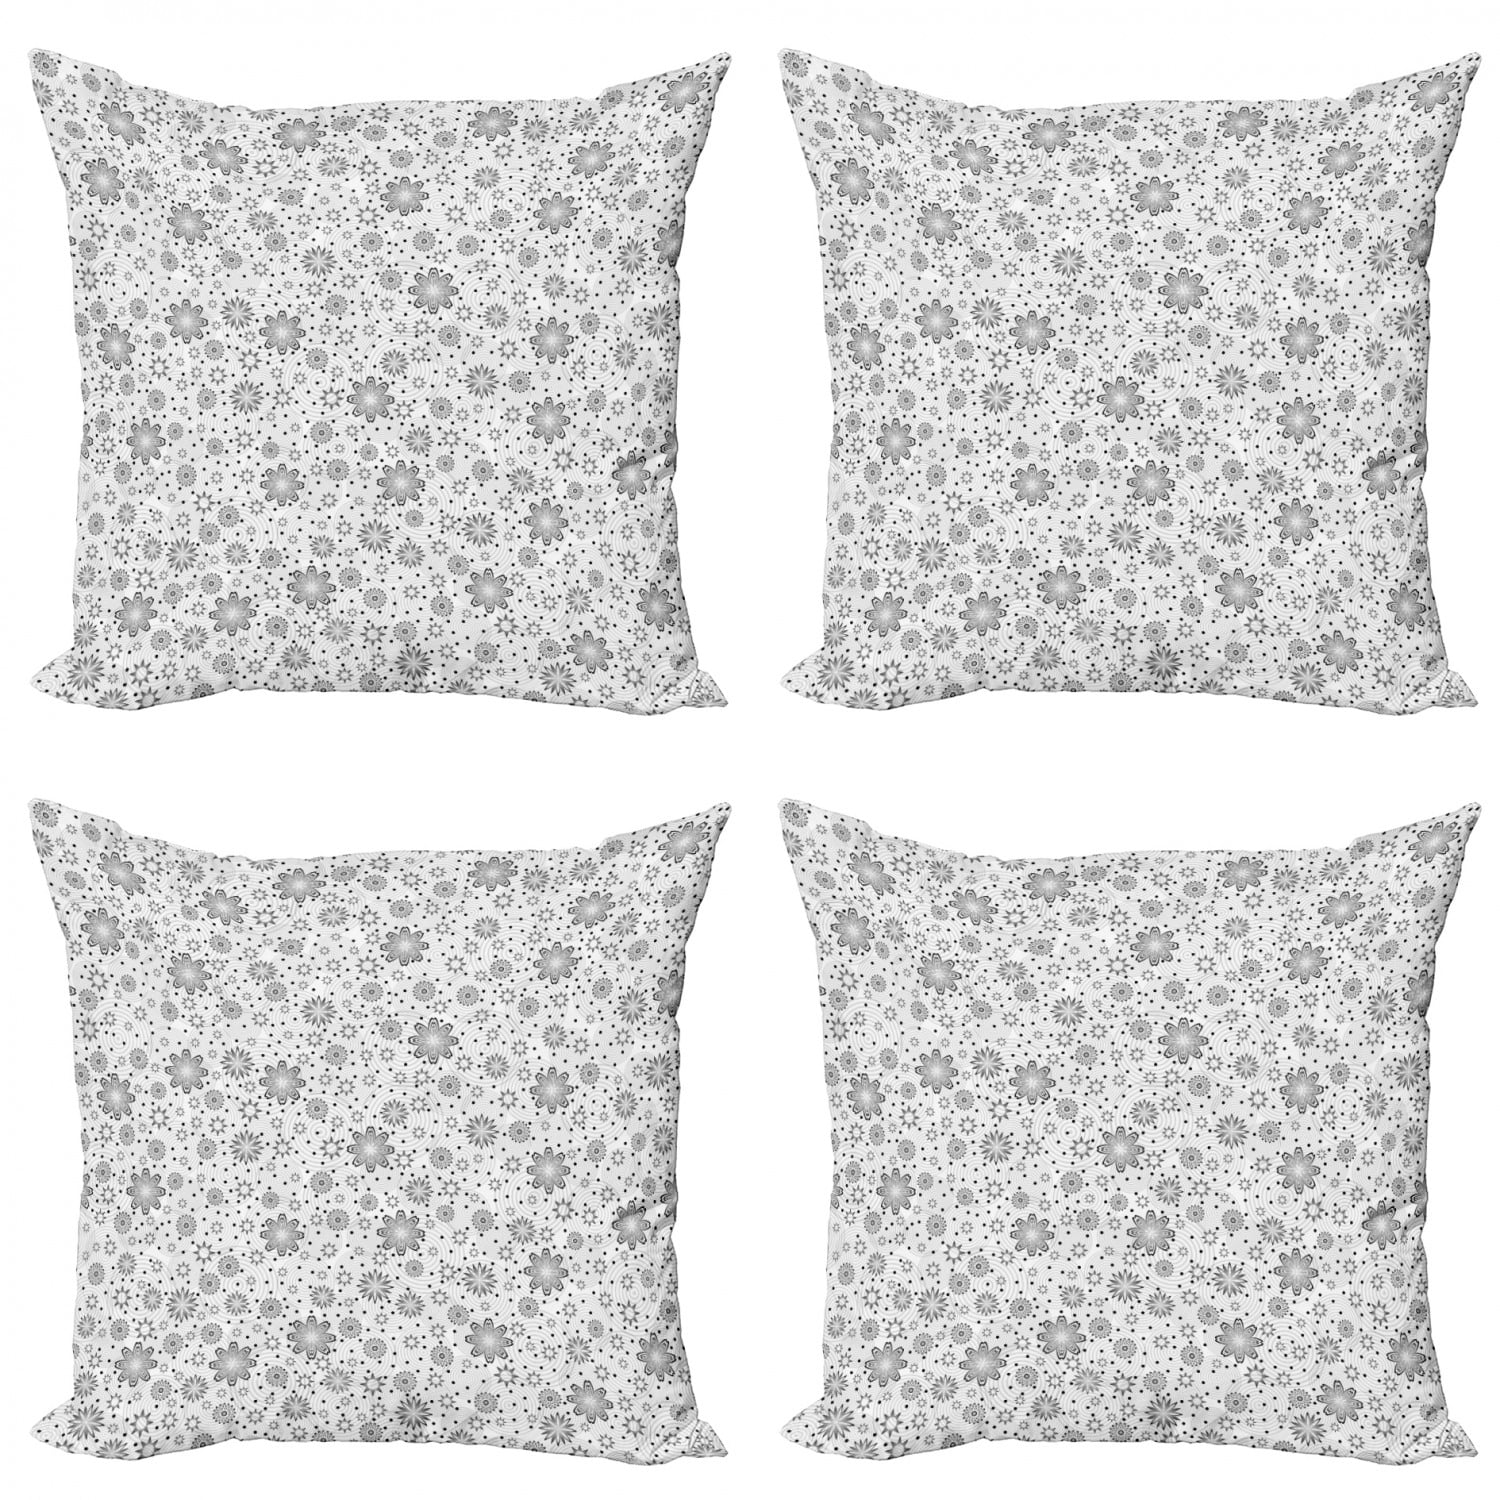 Grey spot Cushion Cover Grey Throw Pillow boho cushion cover grey cushion cover graphic print grey throw pillow